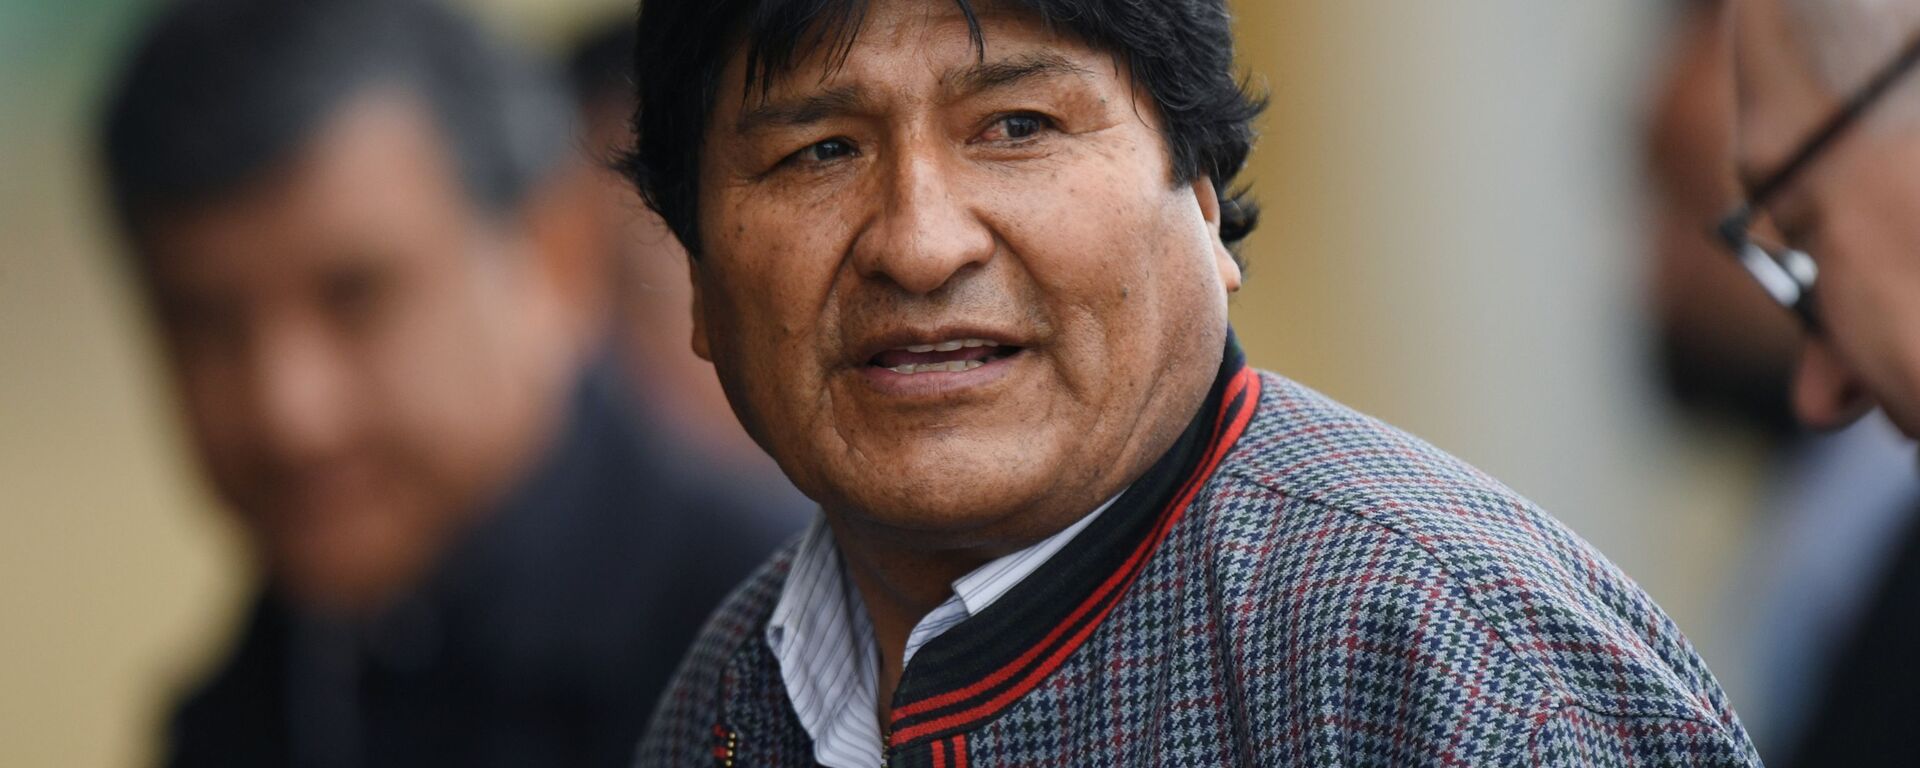 Evo Morales, presidente boliviano  - Sputnik Mundo, 1920, 12.02.2021